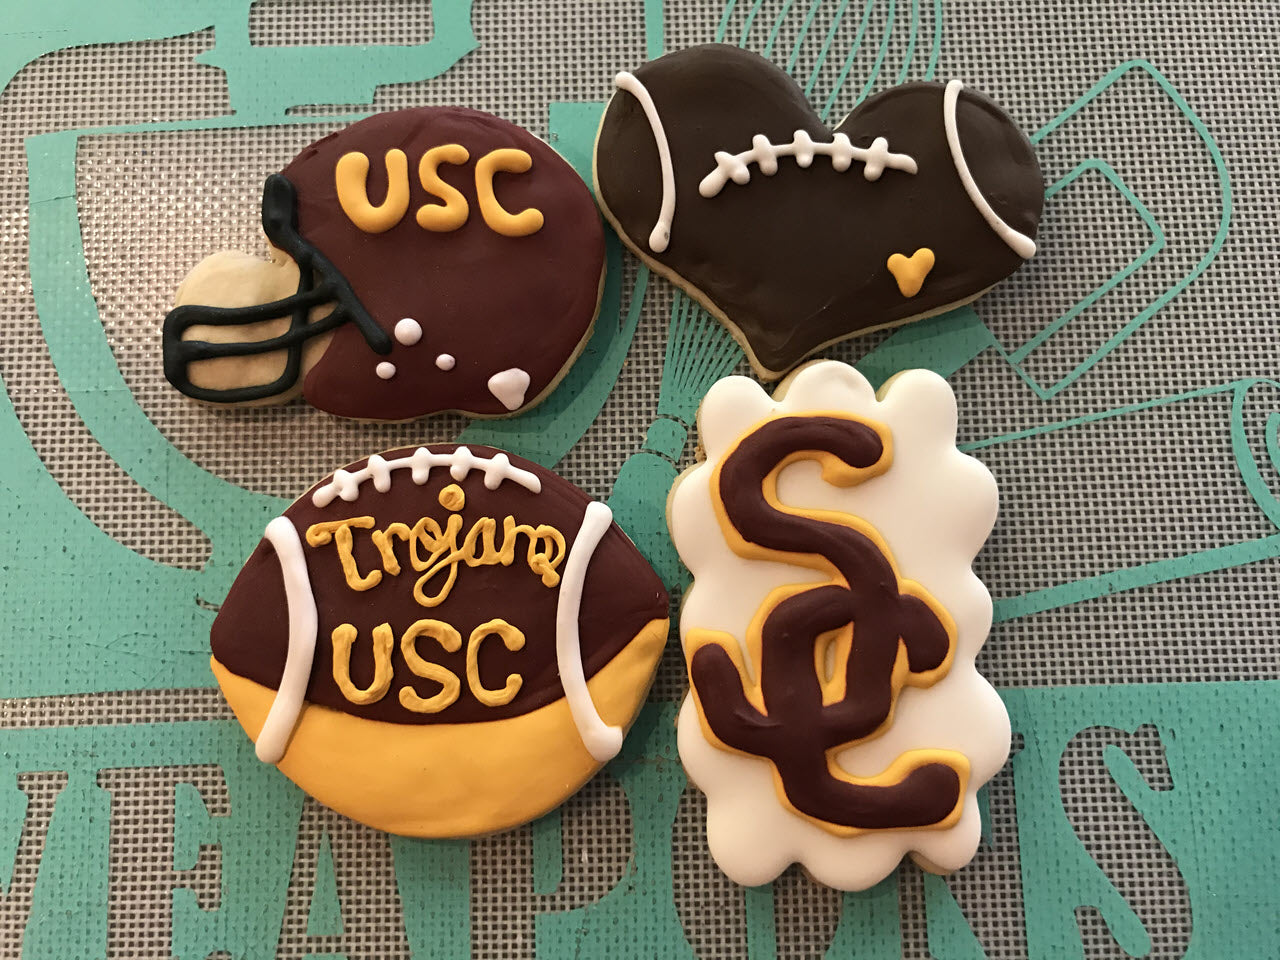 USC Trojans football sugar cookies